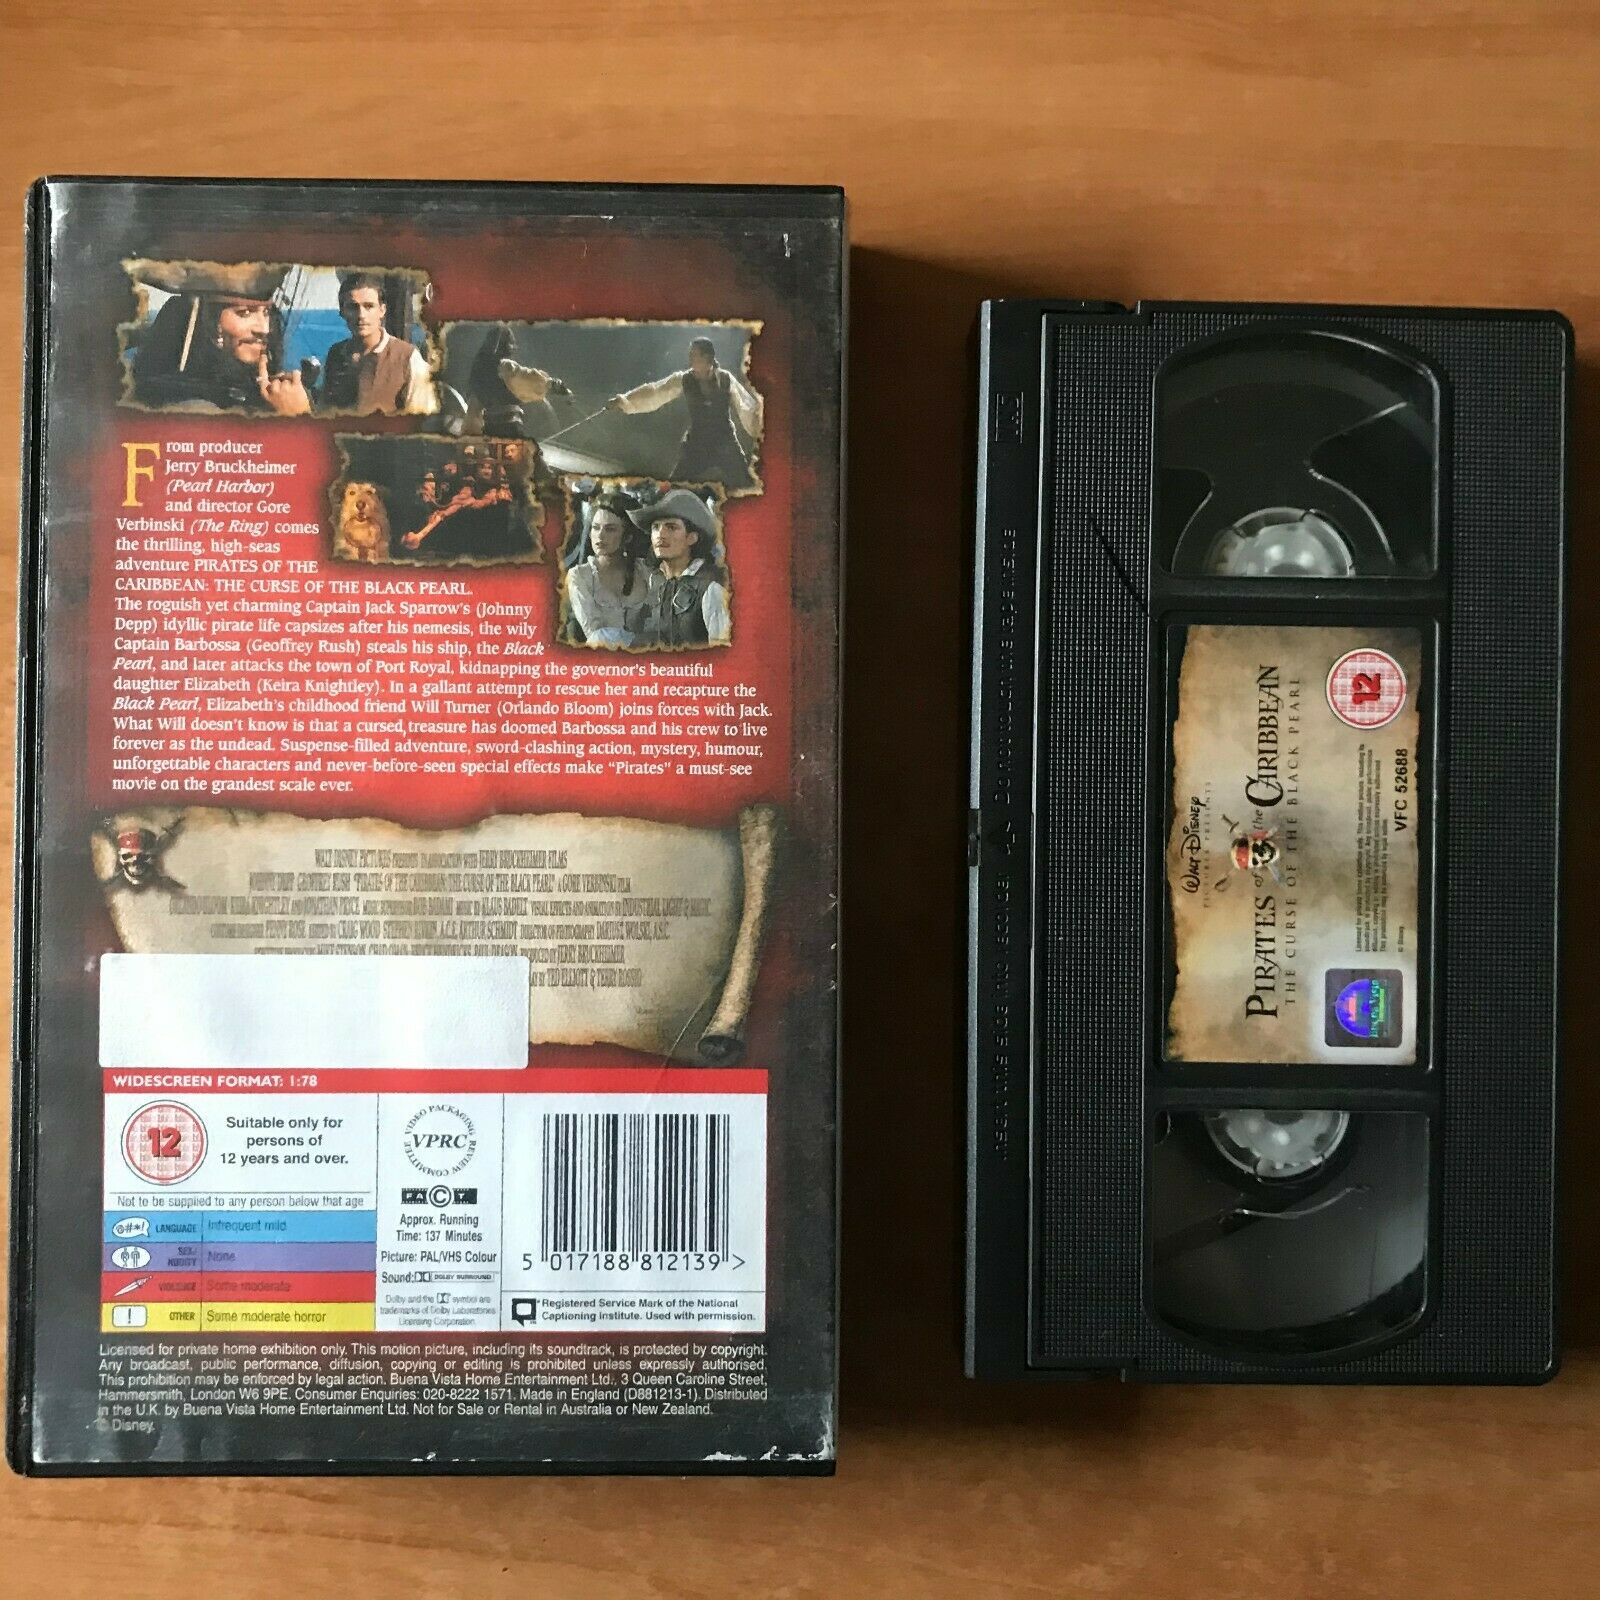 Pirates Of Caribbean [Black Pearl] Fantasy Adventure [Large Box] Rental - VHS-